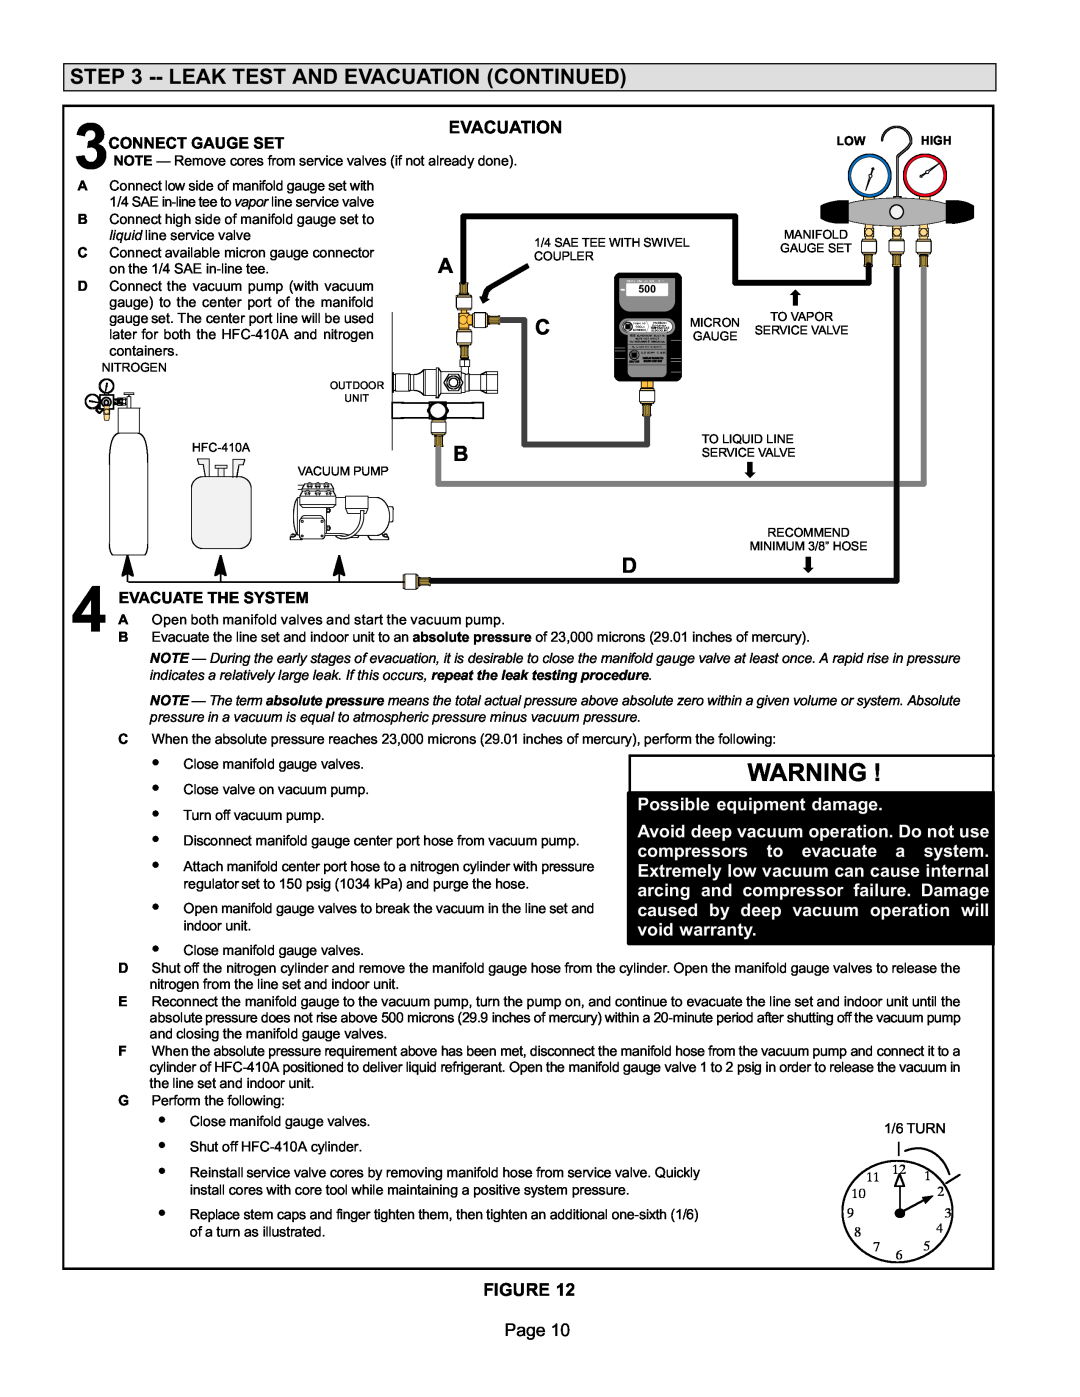 Lennox International Inc 506945-01 Leak Test And Evacuation Continued, Possible equipment damage, void warranty 